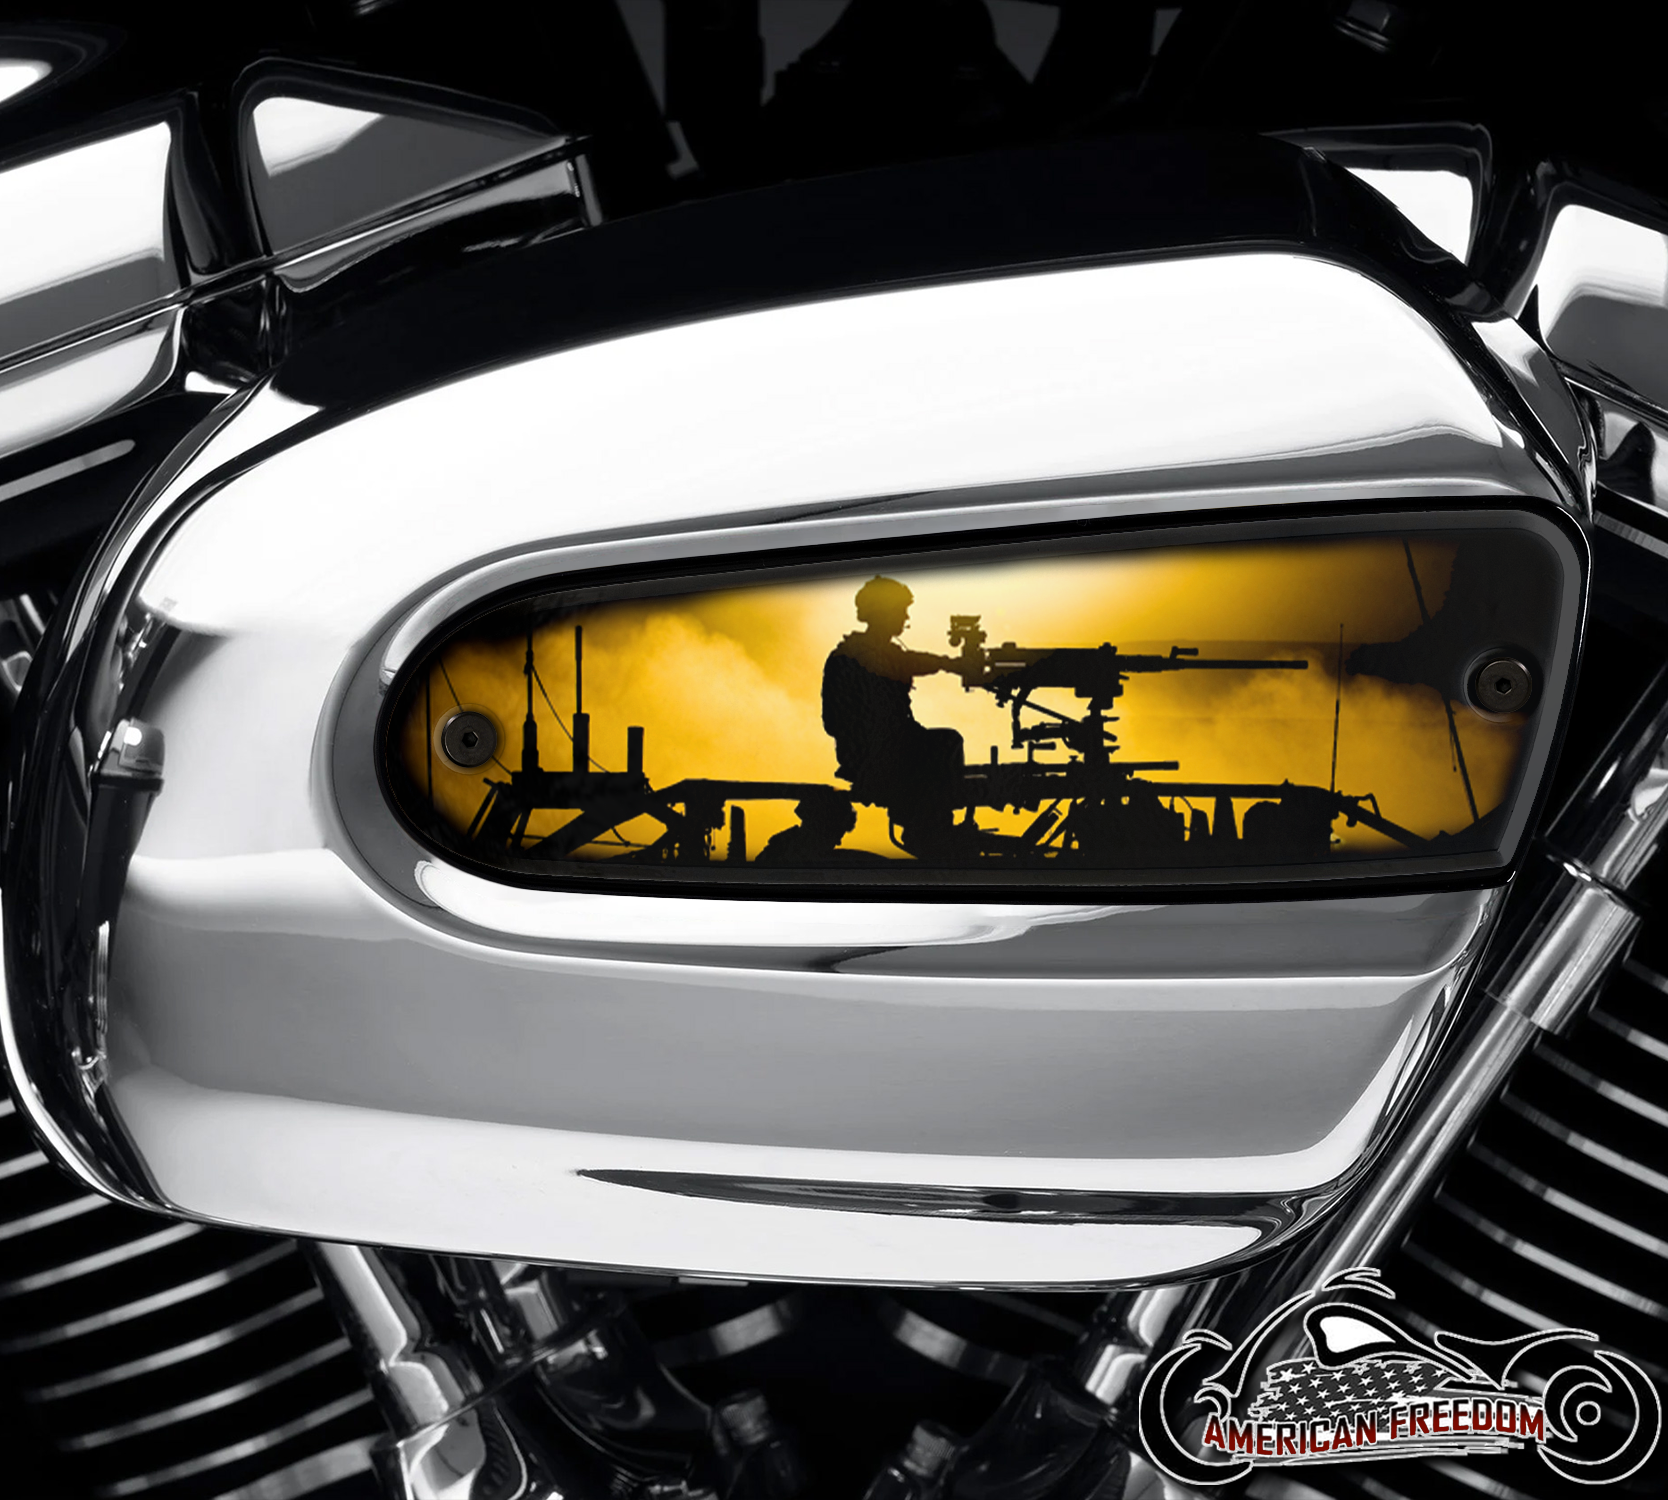 Harley Davidson Wedge Air Cleaner Insert - Silhouette Soldier